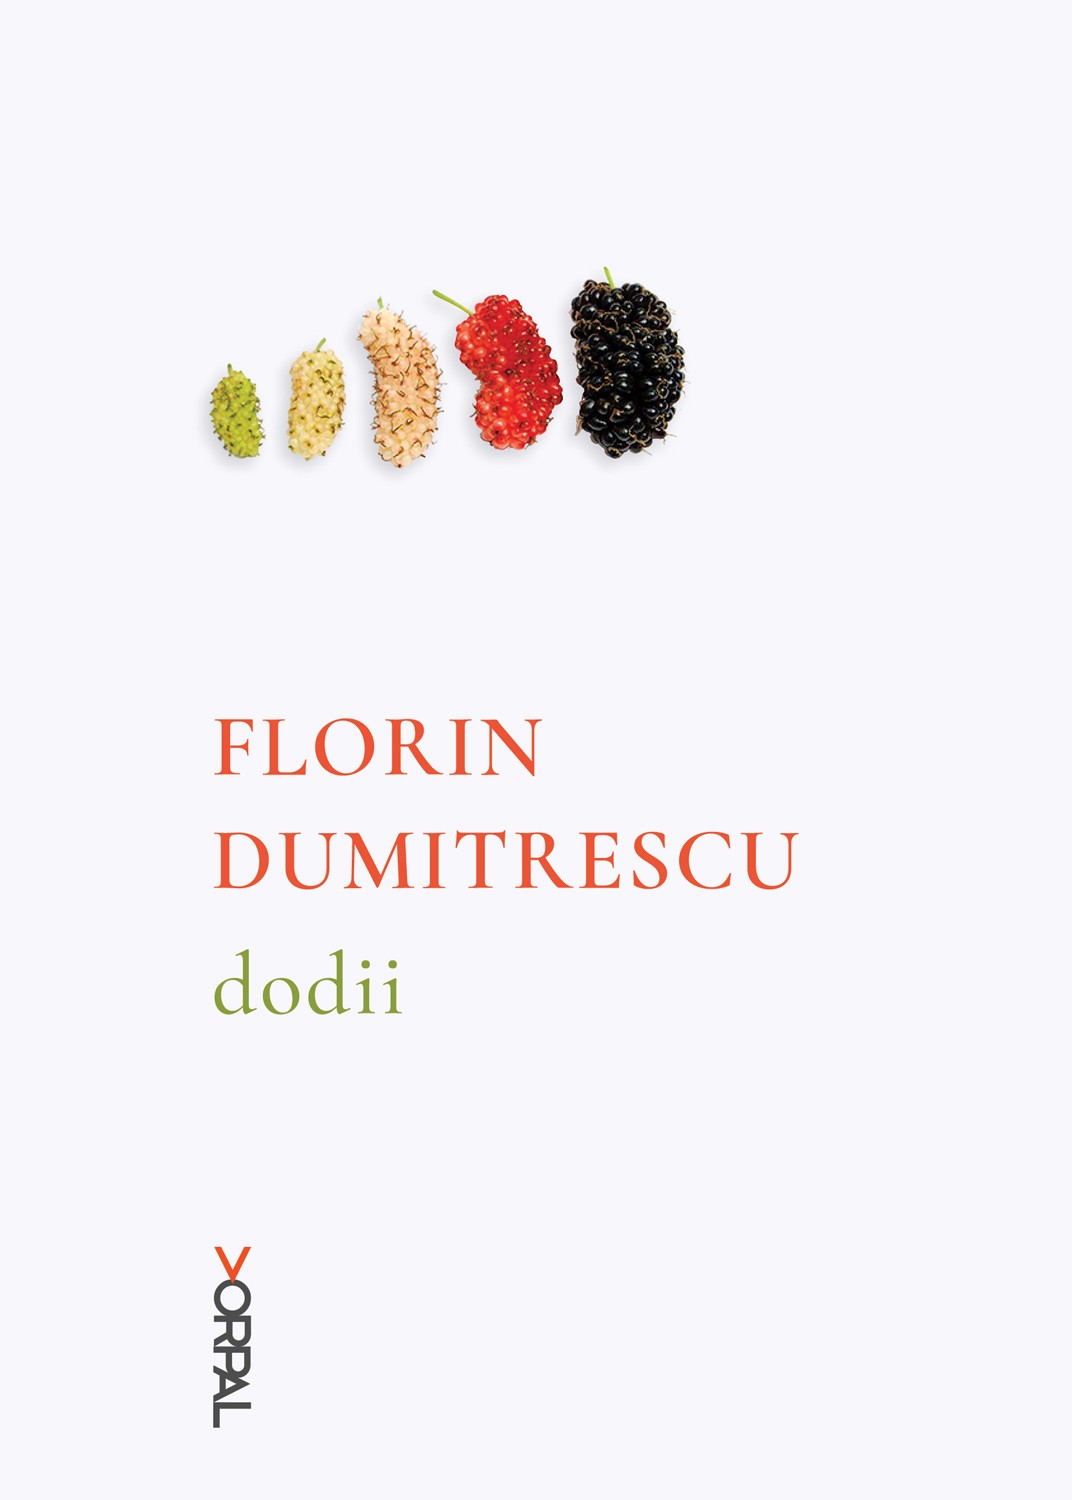 Dodii de Florin Dumitrescu